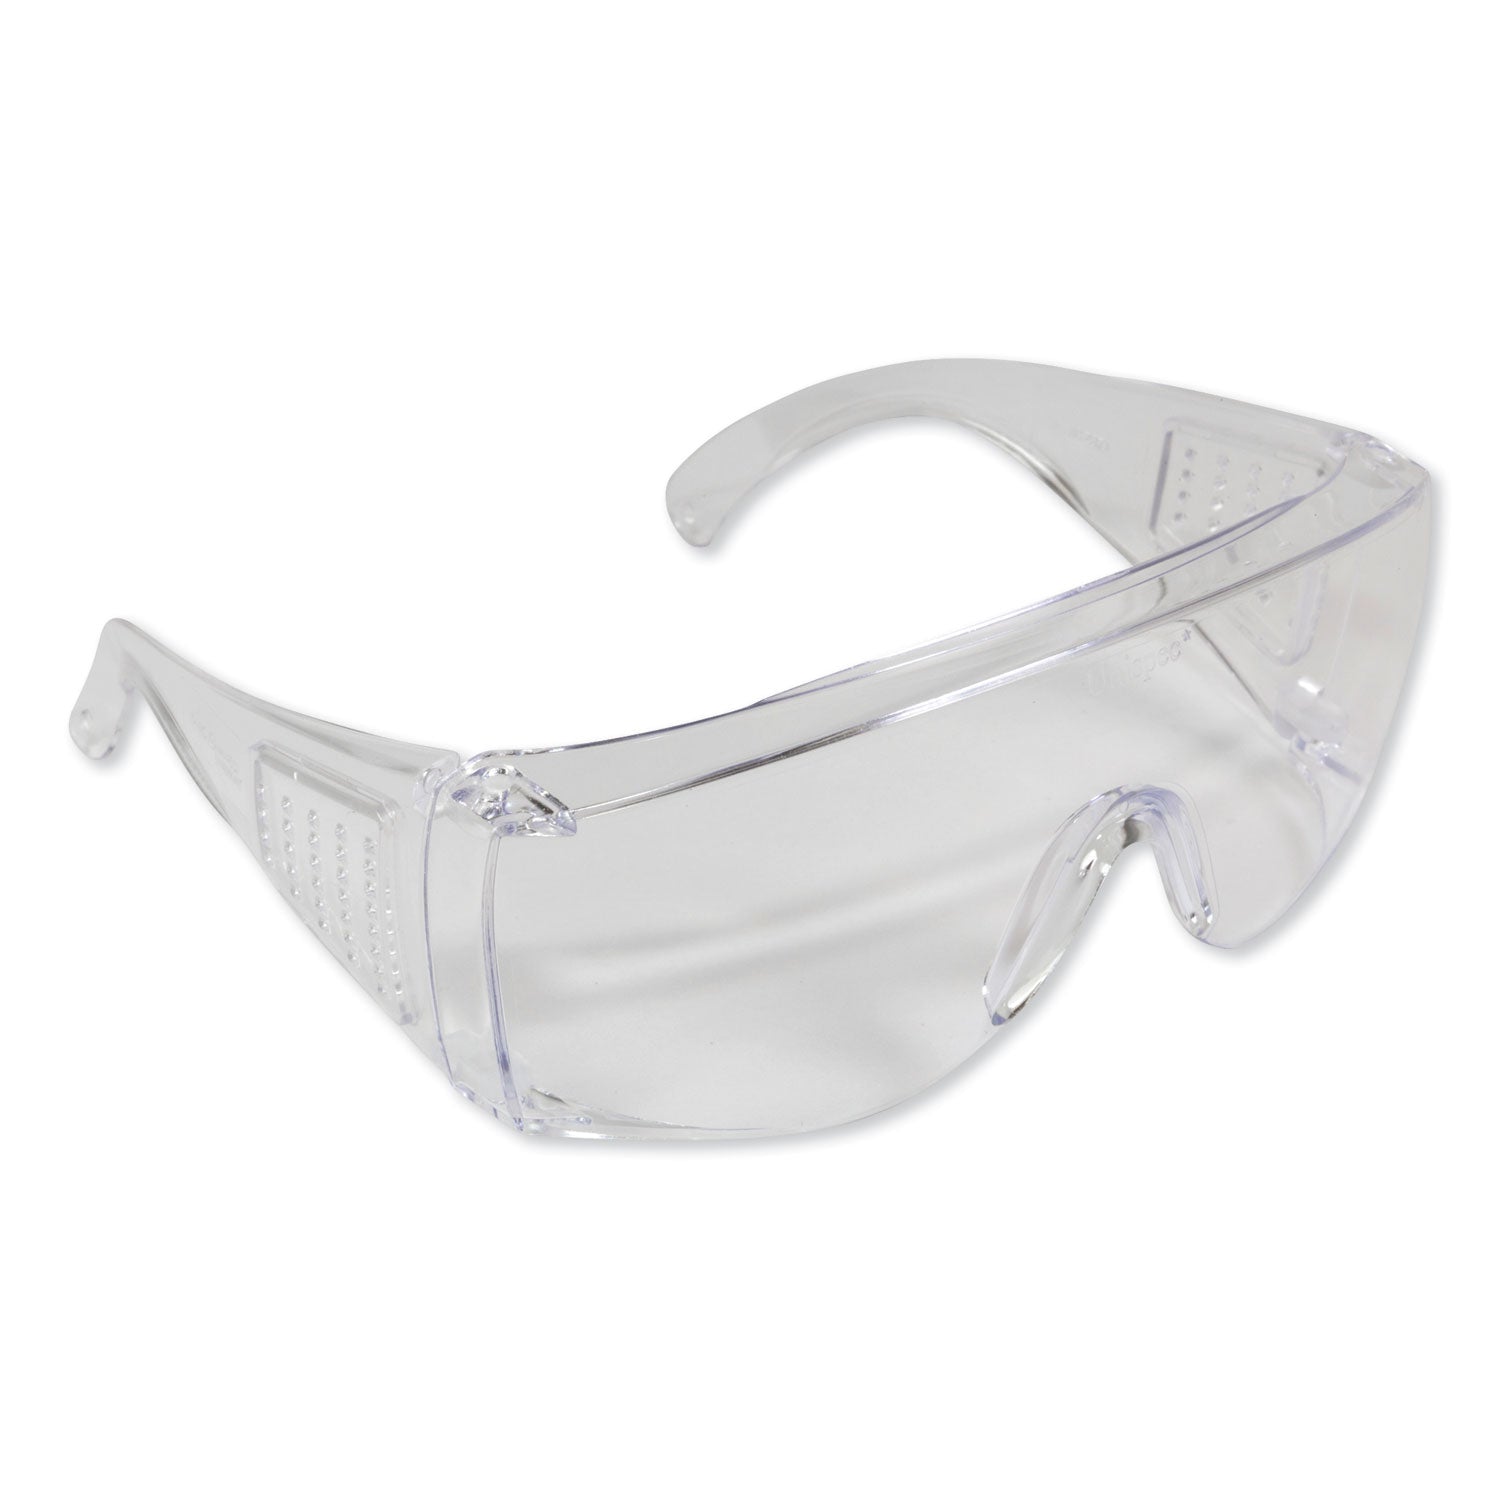 unispec-ii-safety-glasses-clear-50-carton_kcc16727 - 1